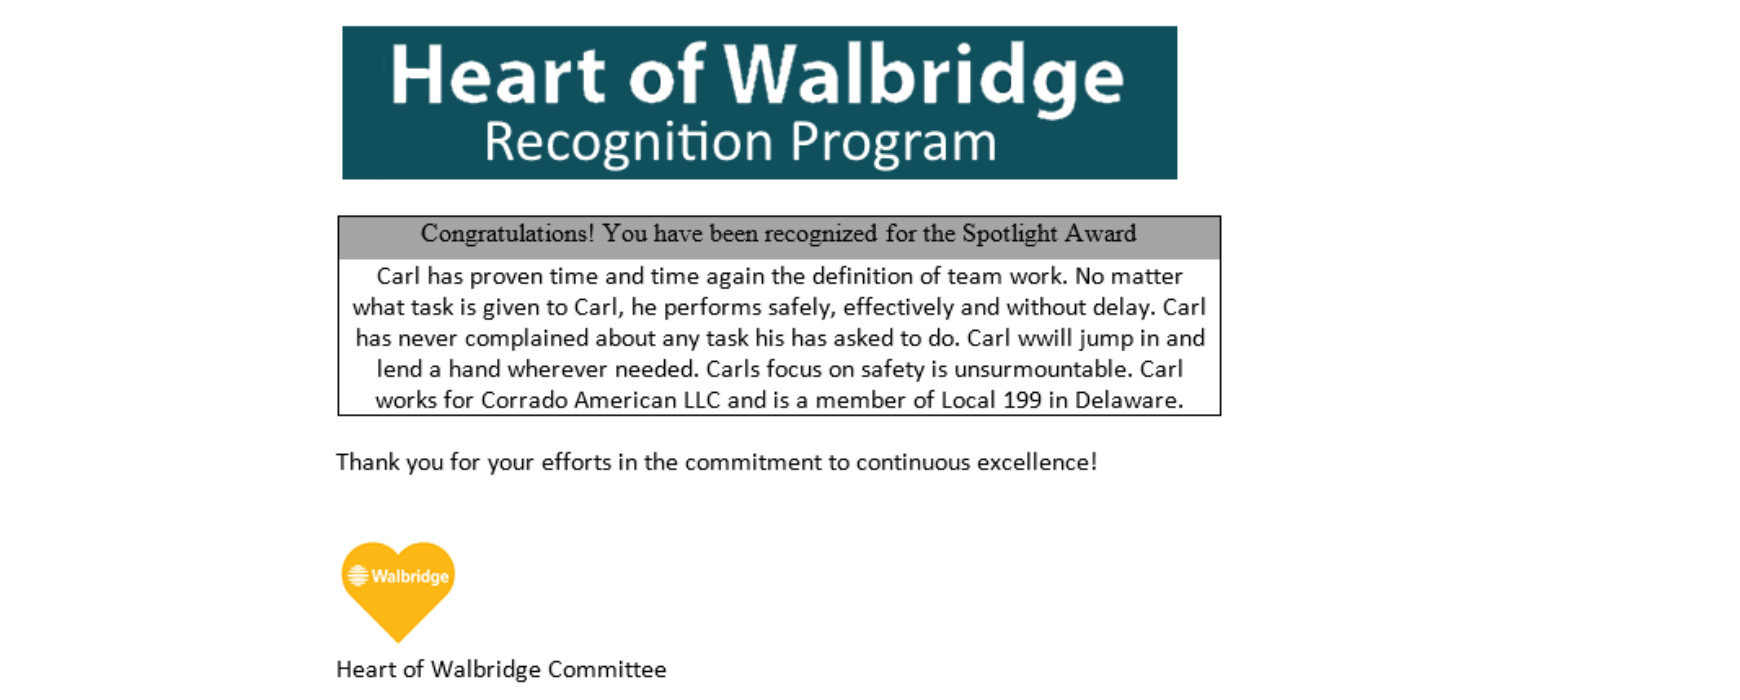 Heart of Walbridge Recognition Program